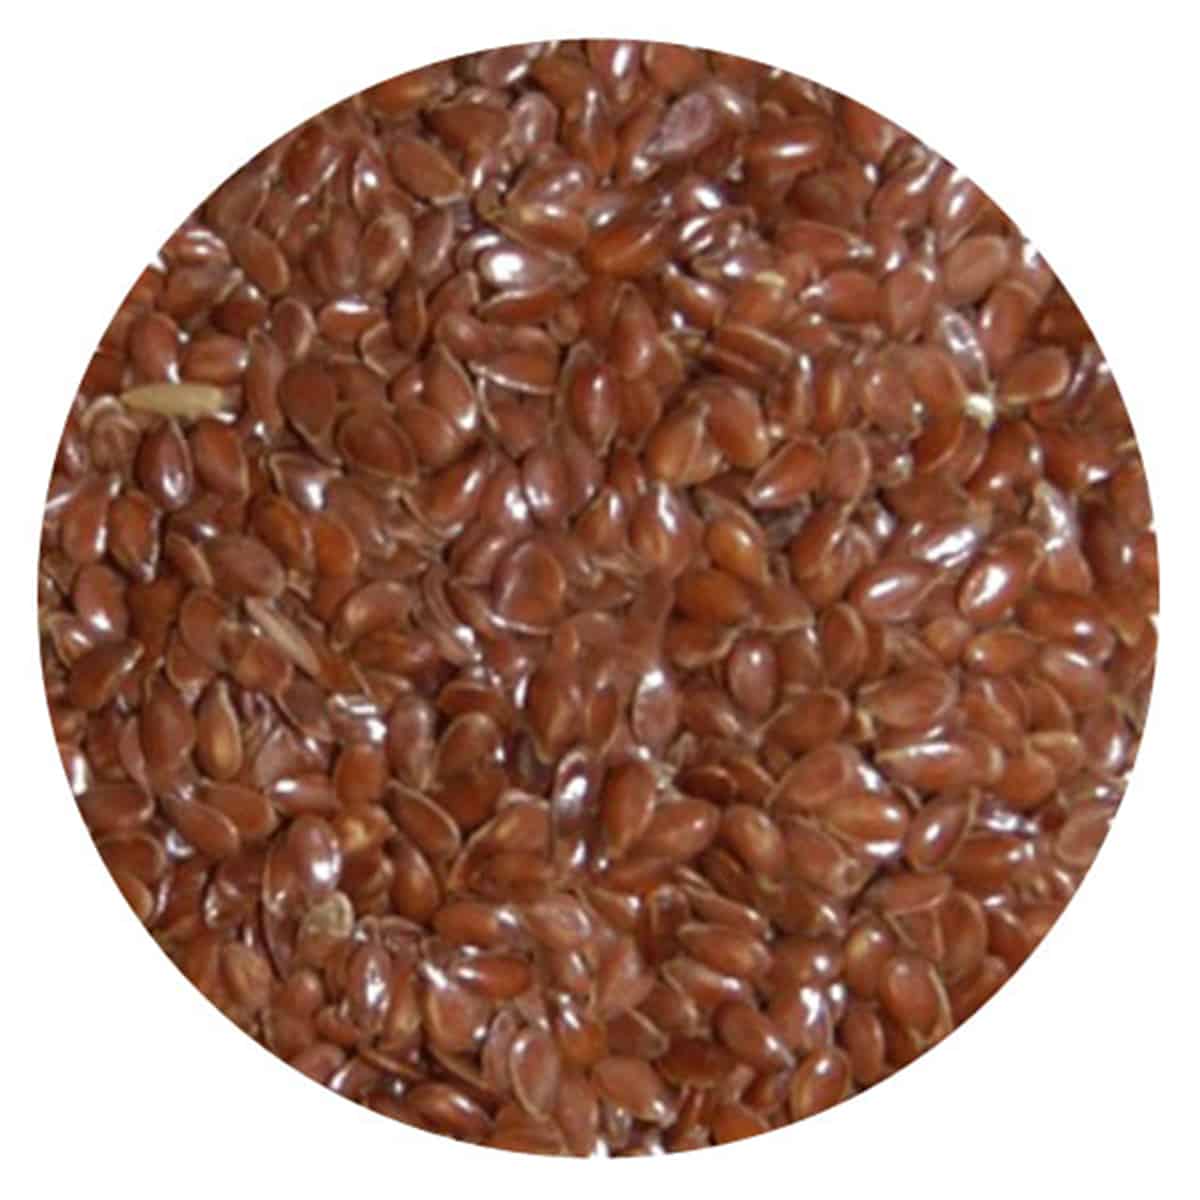 Buy IAG Foods Flax Seeds - 1 kg